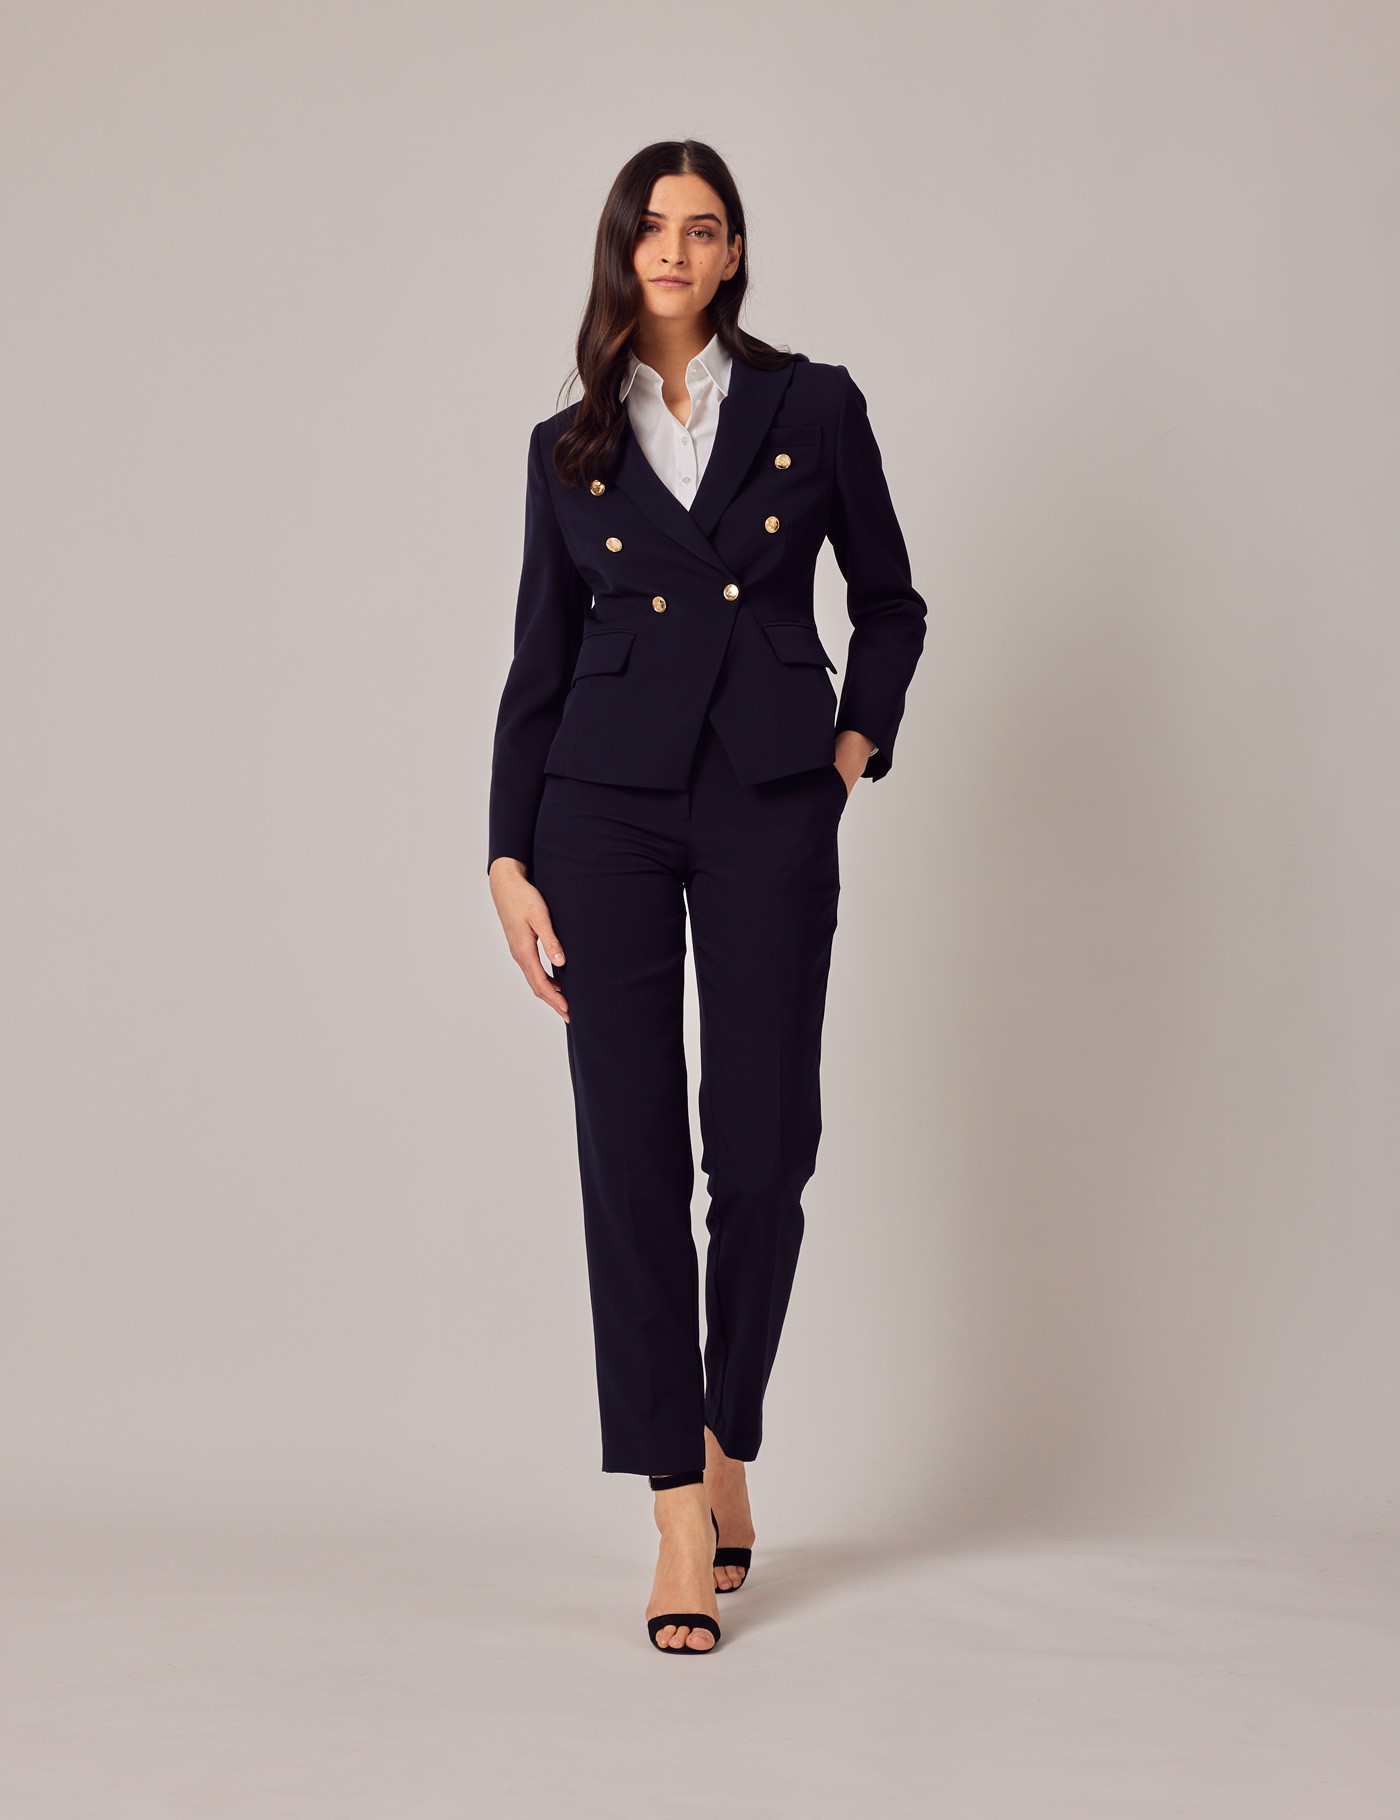 JacketPants Women Business Suits Fashion Navy Blue Two Button Female  Office Uniform Ladies Formal